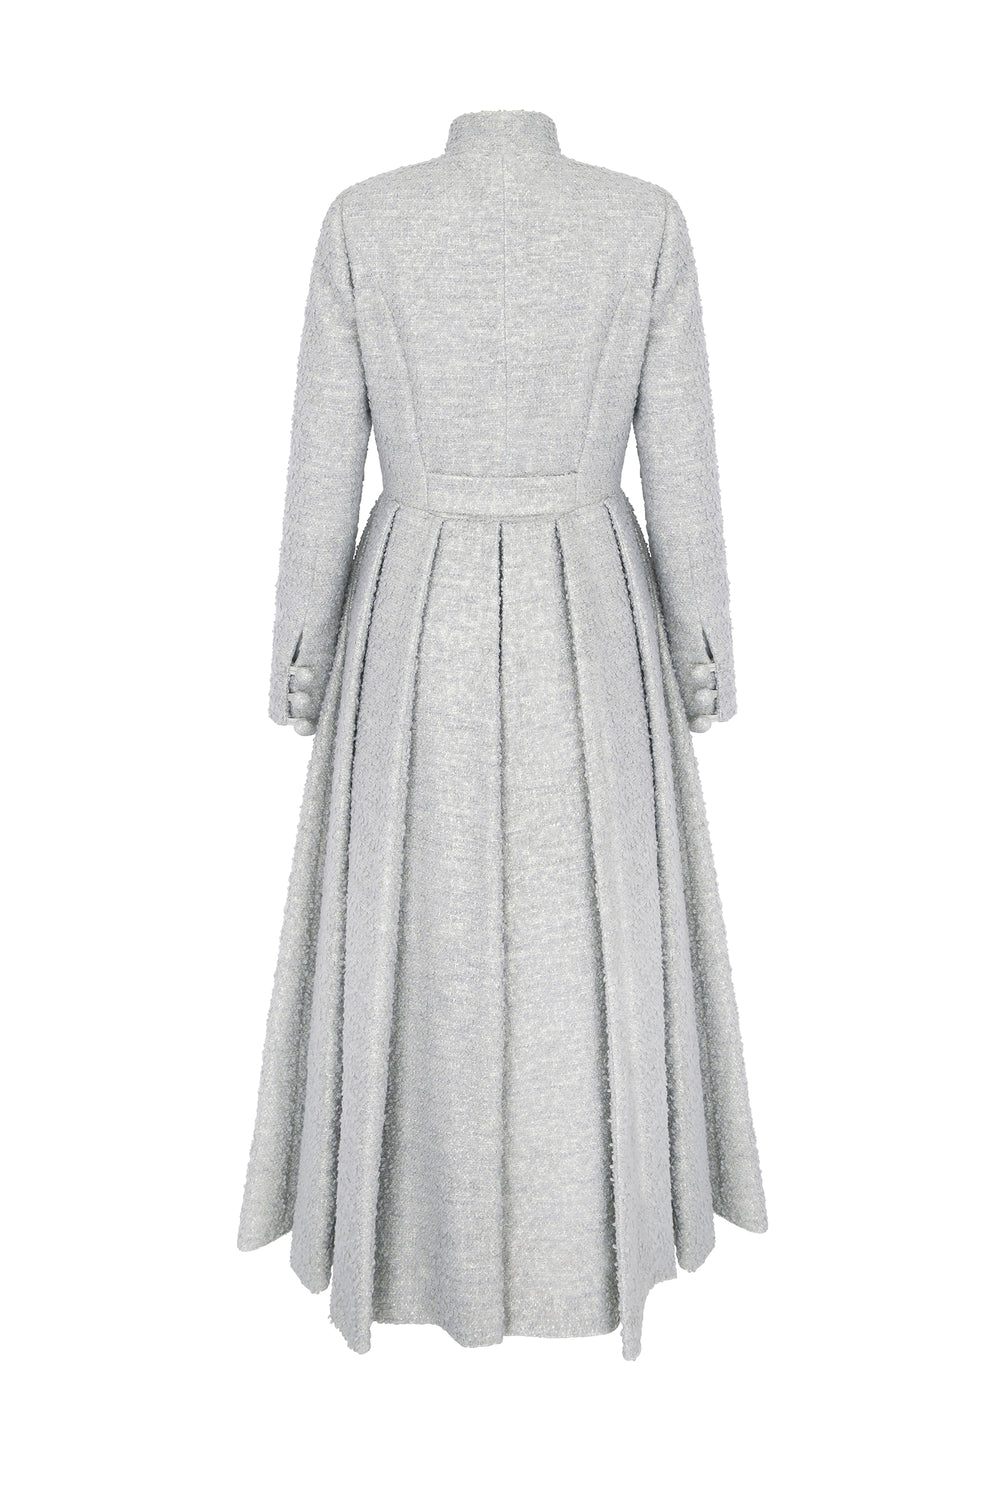 Suzannah London, Madrid Coat Dress Metallic Tweed